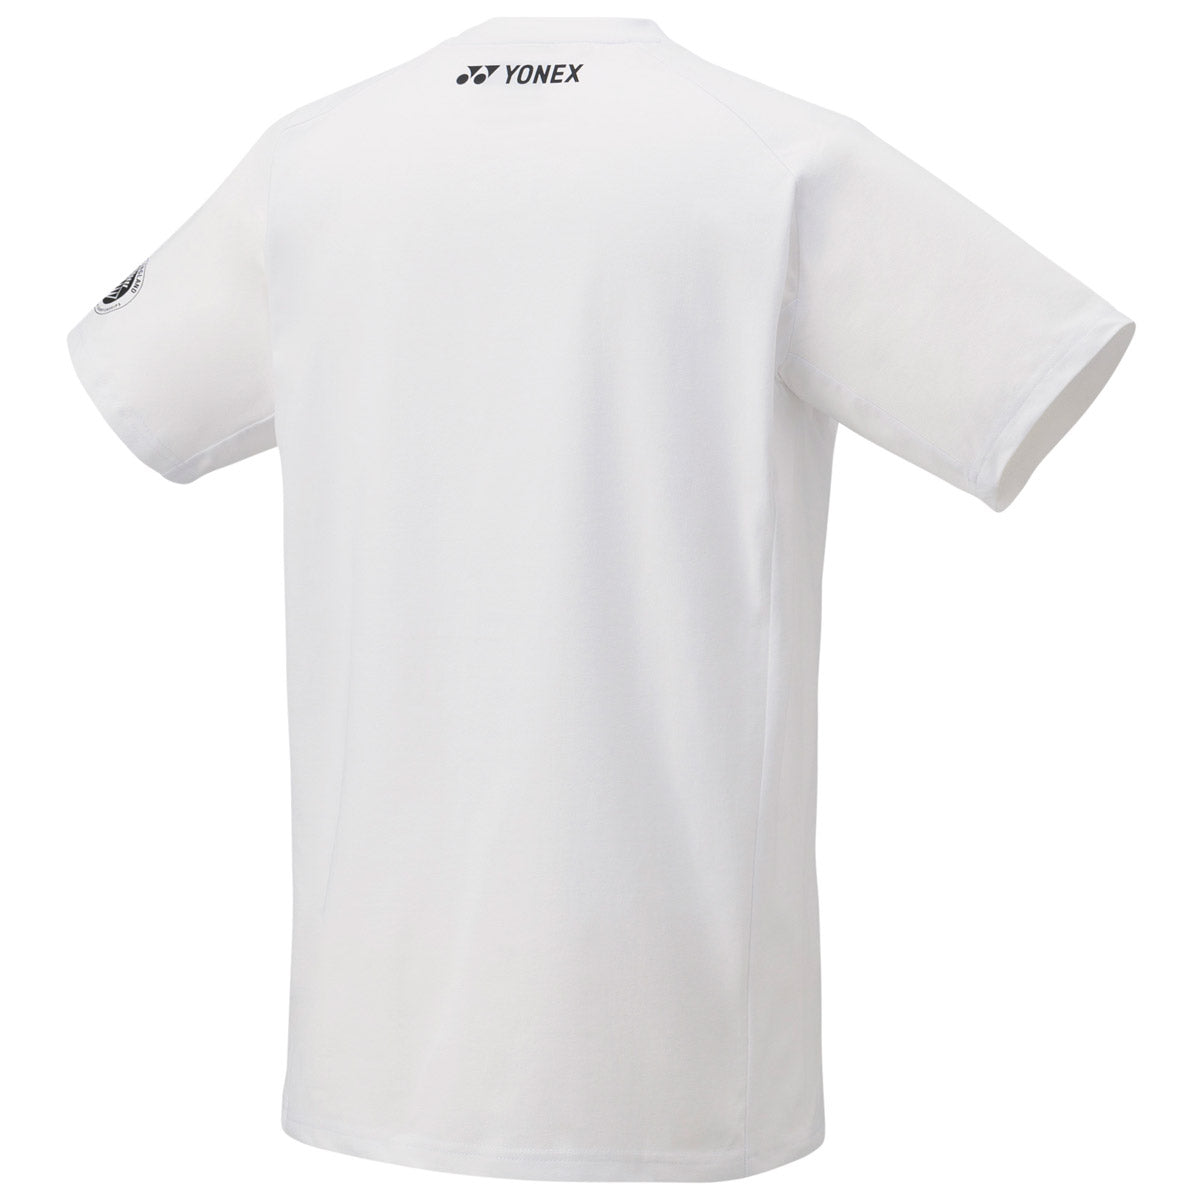 Yonex All-England Badminton Unisex T-Shirt - White